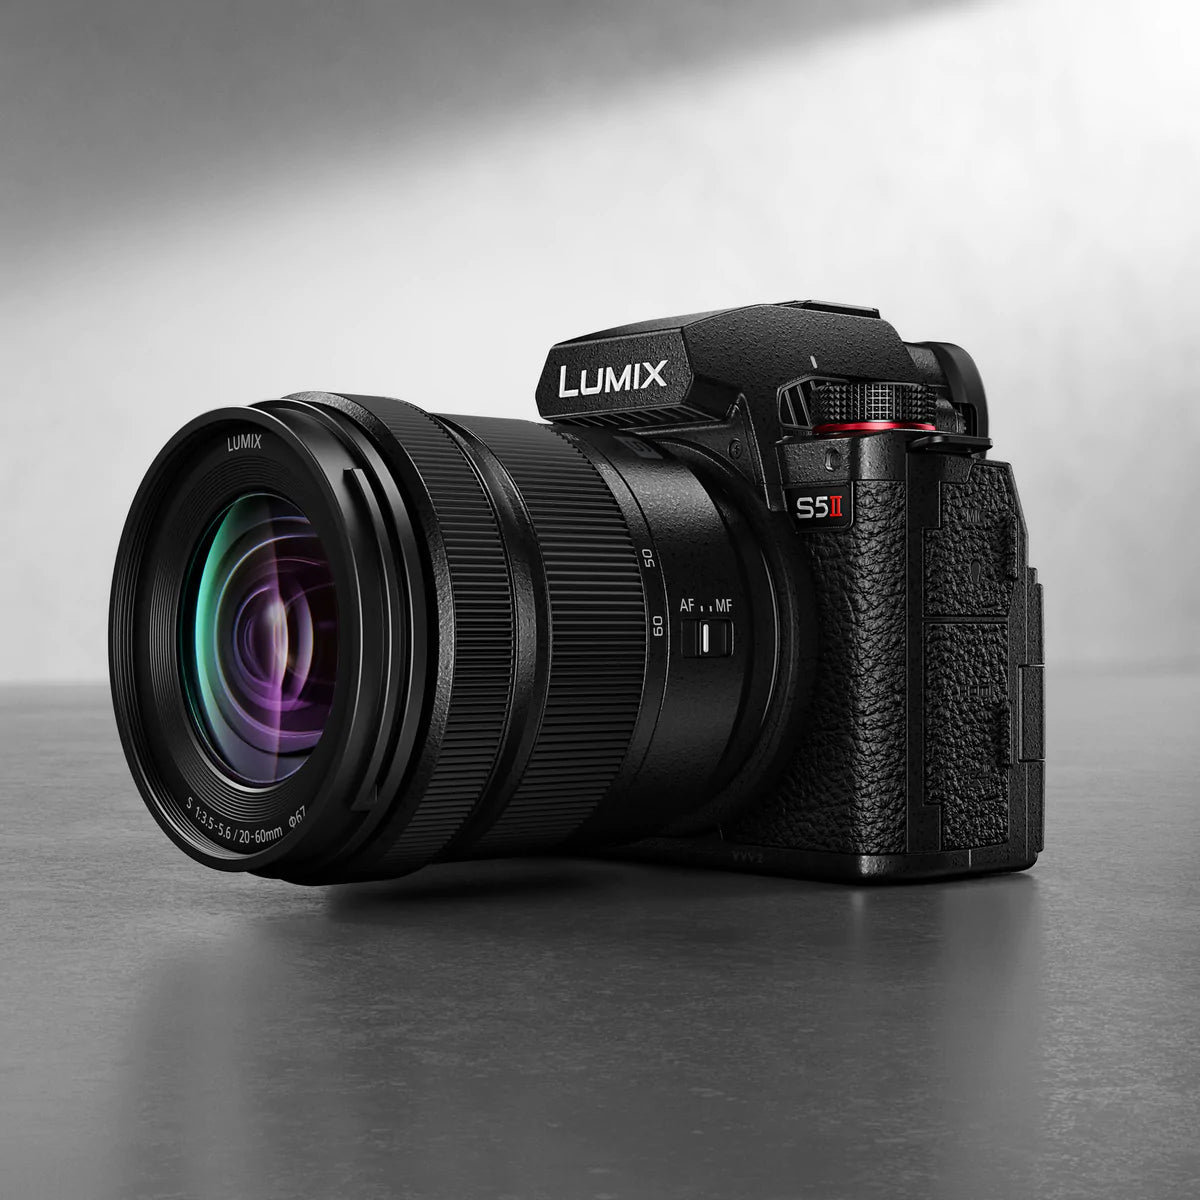 Panasonic Lumix S5 Mirrorless Camera with 24-70mm Lens and Accessories Kit